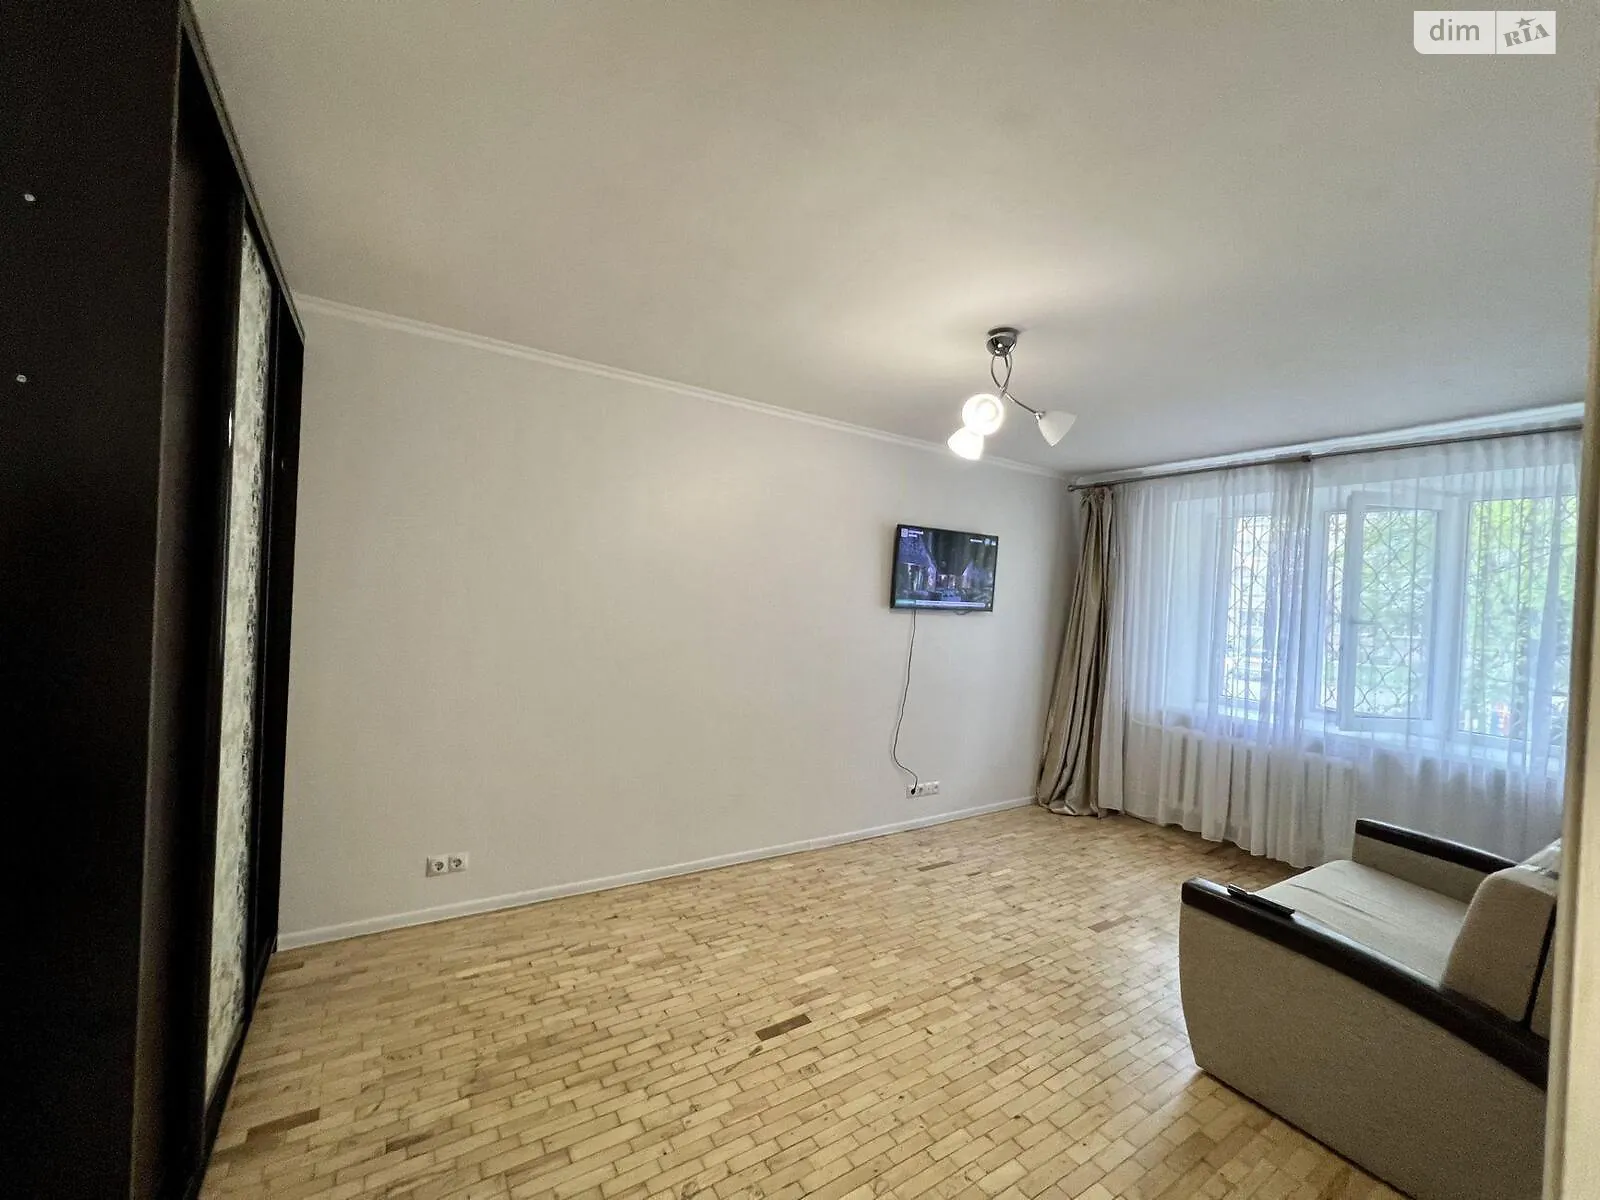 Продается комната 30 кв. м в Киеве, цена: 45000 $ - фото 1